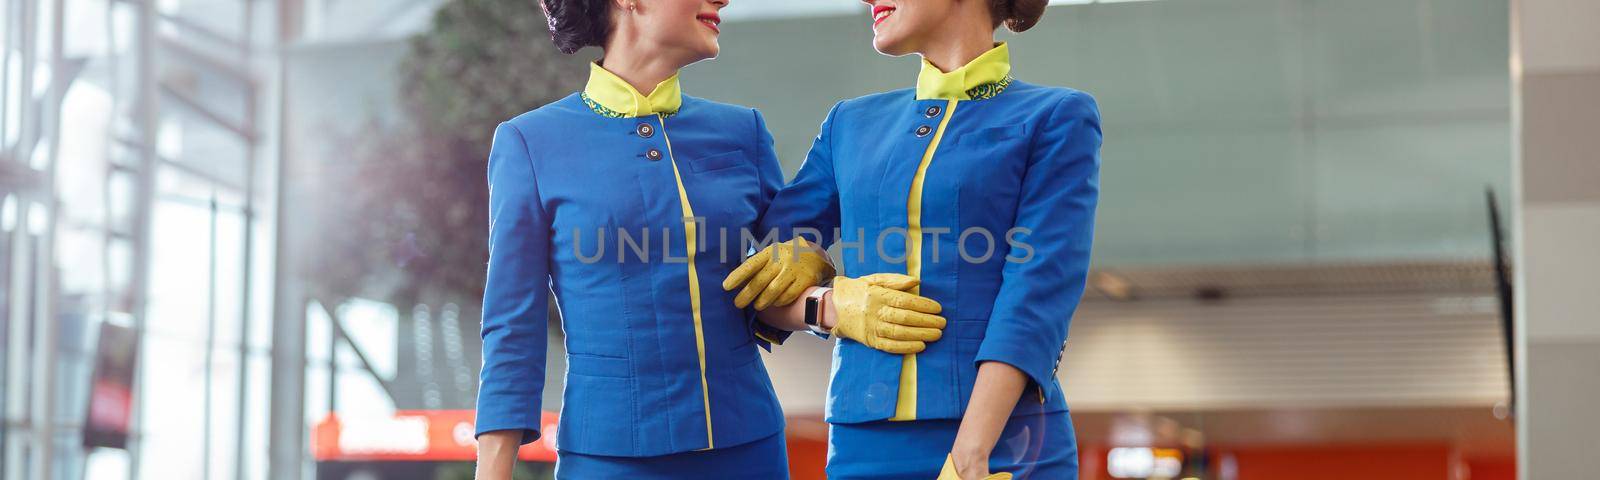 Flight attendants standing arm in arm at airport terminal by Yaroslav_astakhov